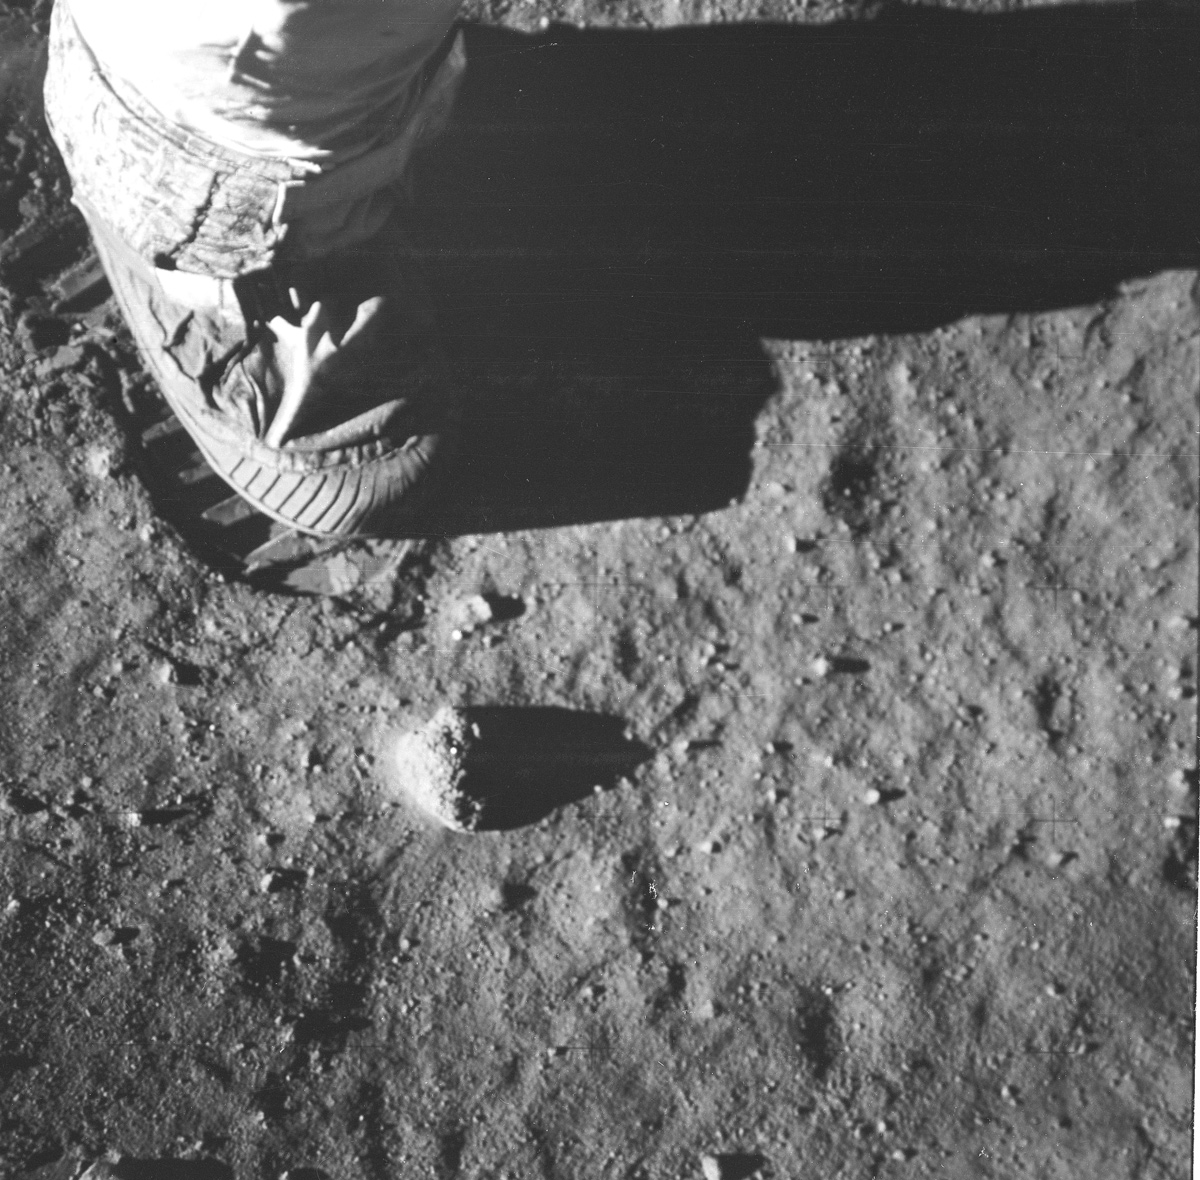 Astronaut's foot and footprint on lunar soil